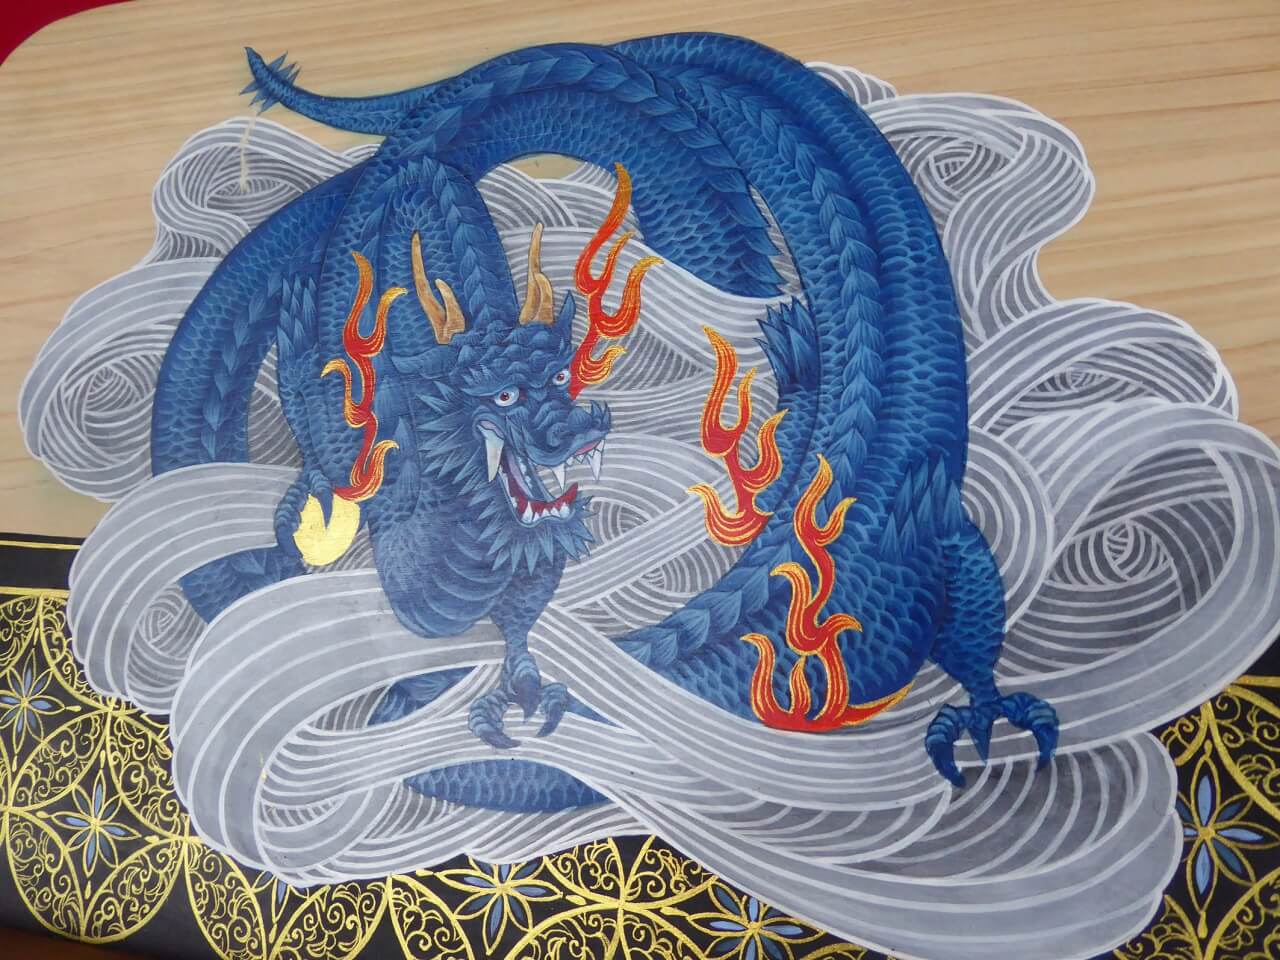 Seiryuun-zu (Blue Dragon among clouds)- Painting